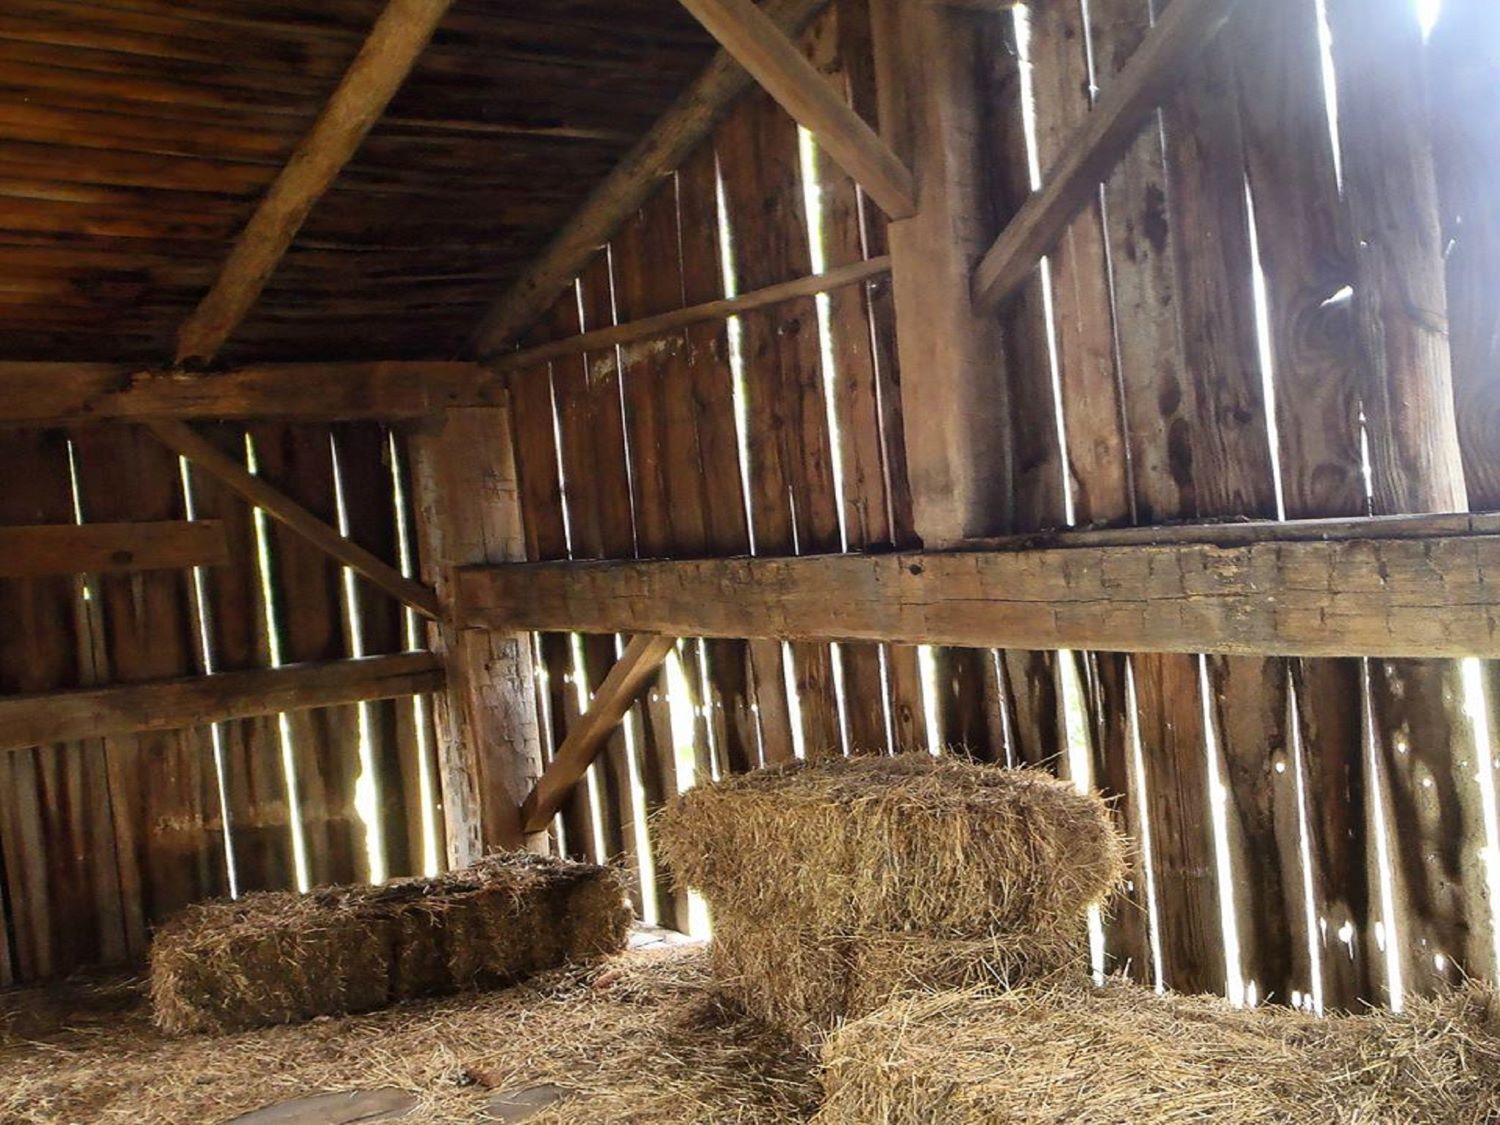 The hayloft of a Chelsea, MI barn